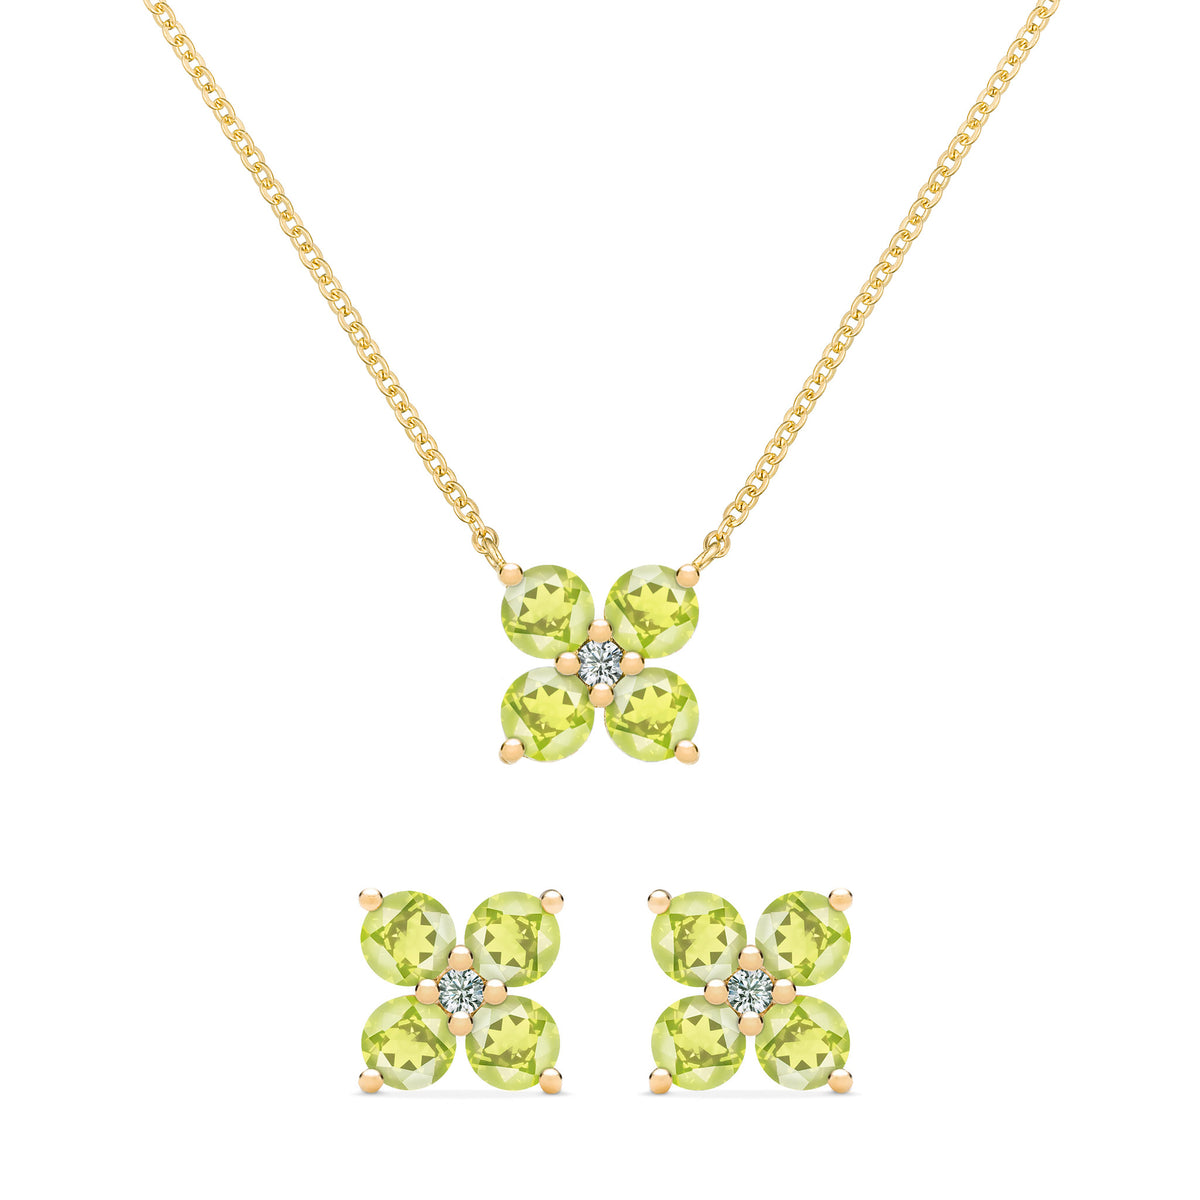 Greenwich Flower Sapphire & Diamond Necklace in 14k Gold (September)